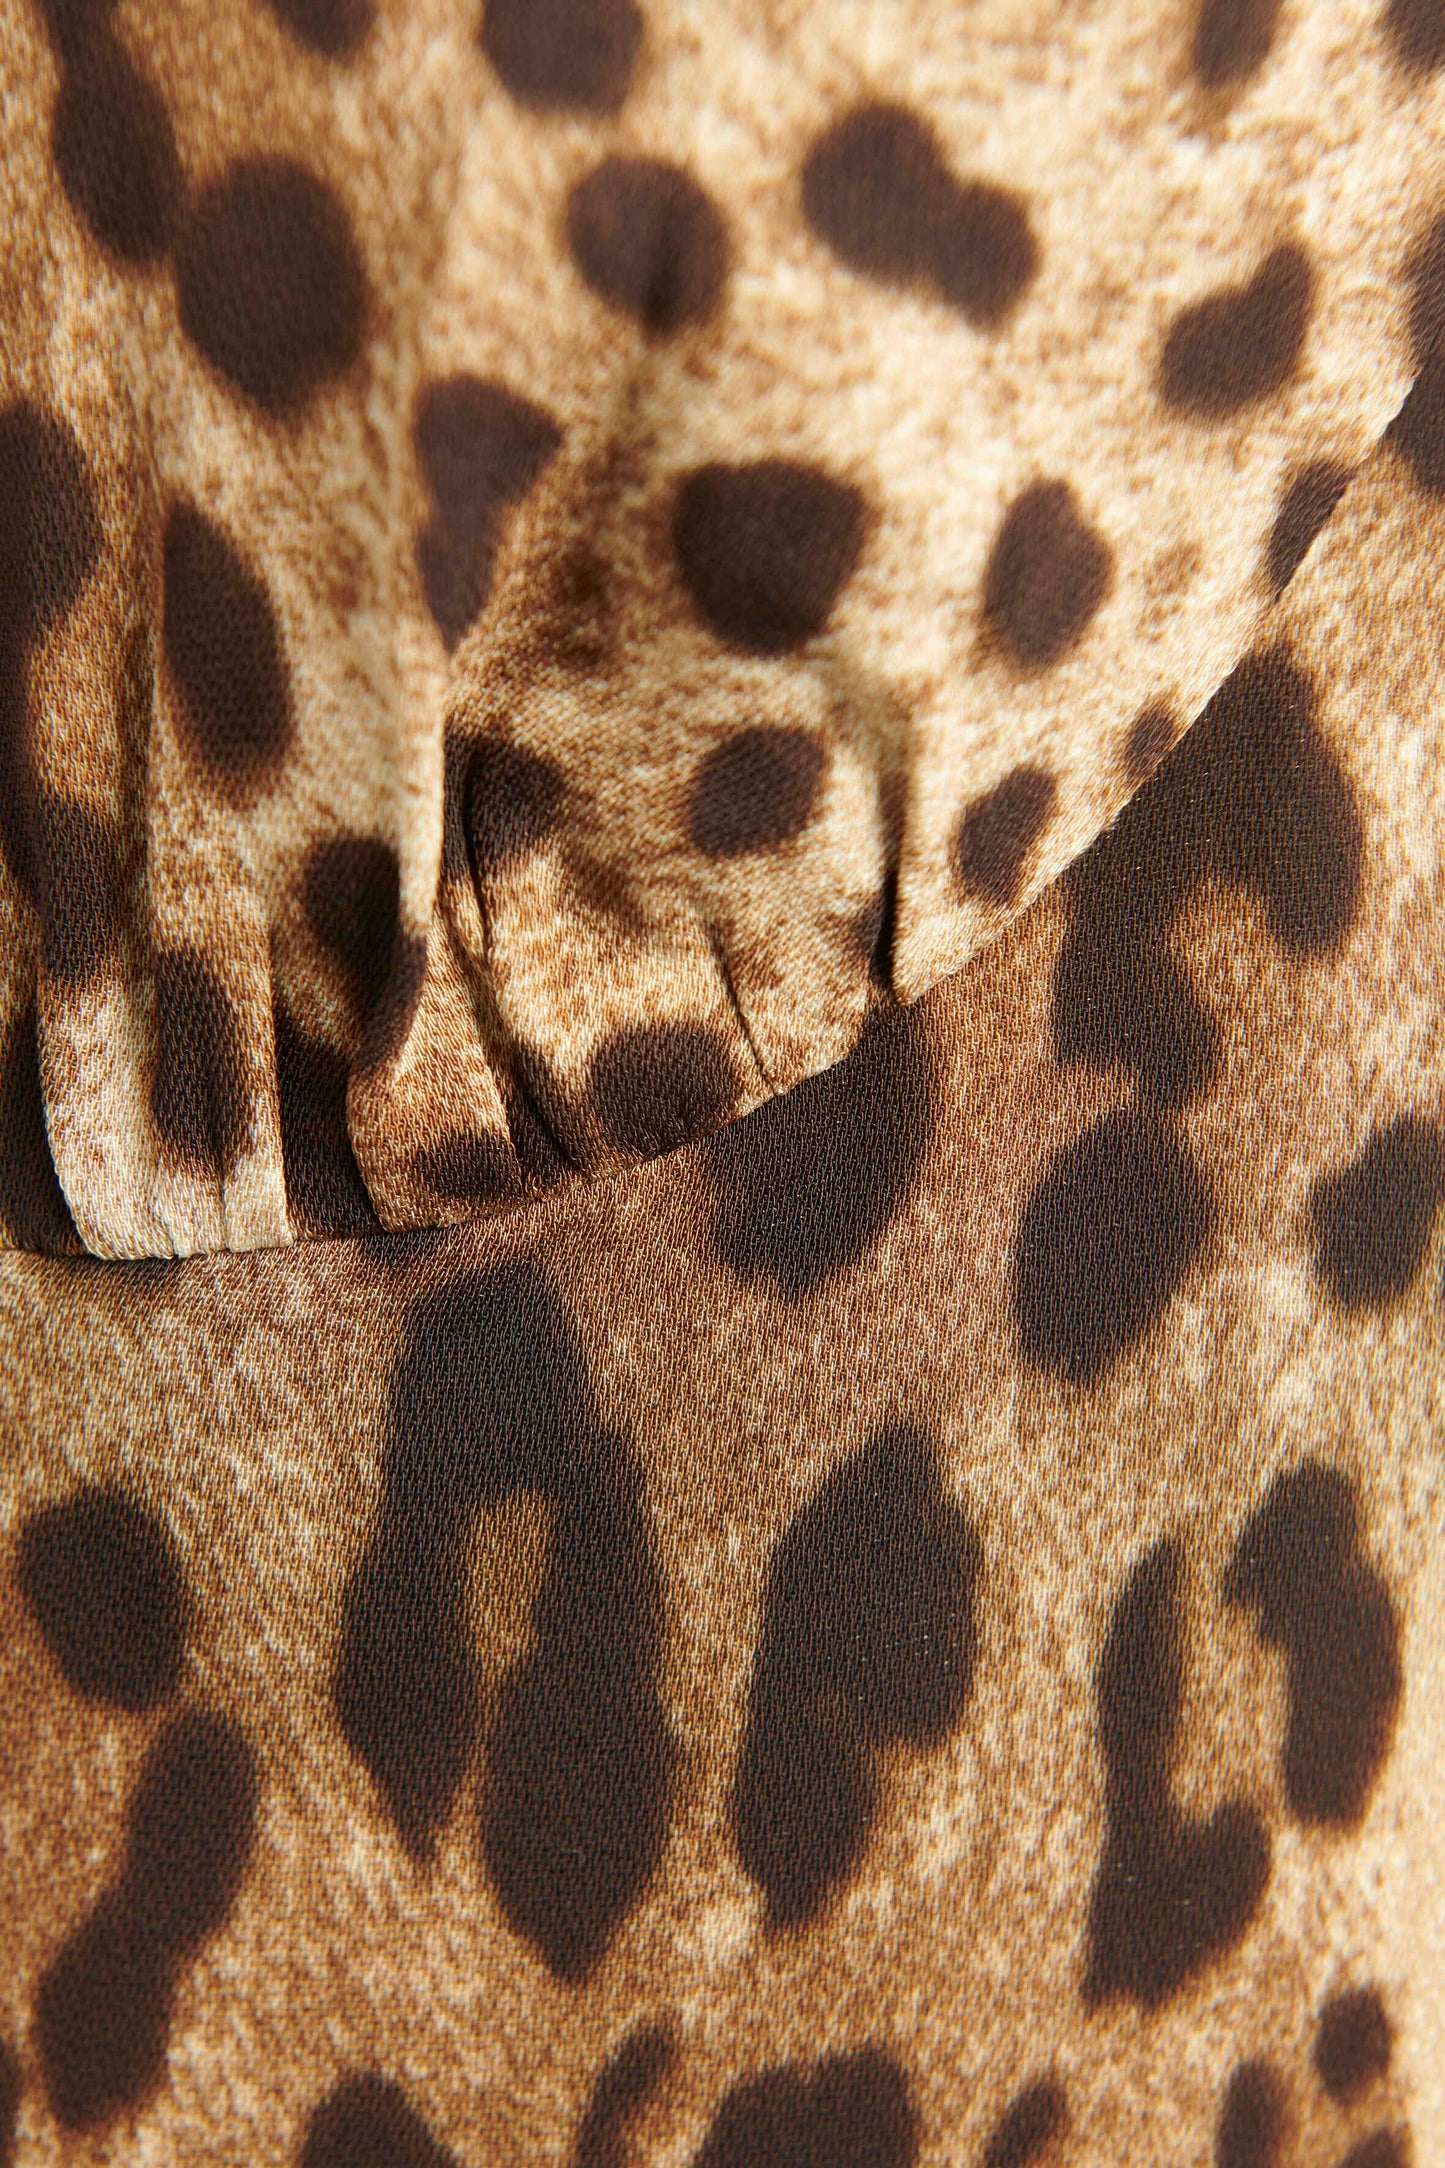 Leopard Viscose Blend Preowned Knee Length Dress